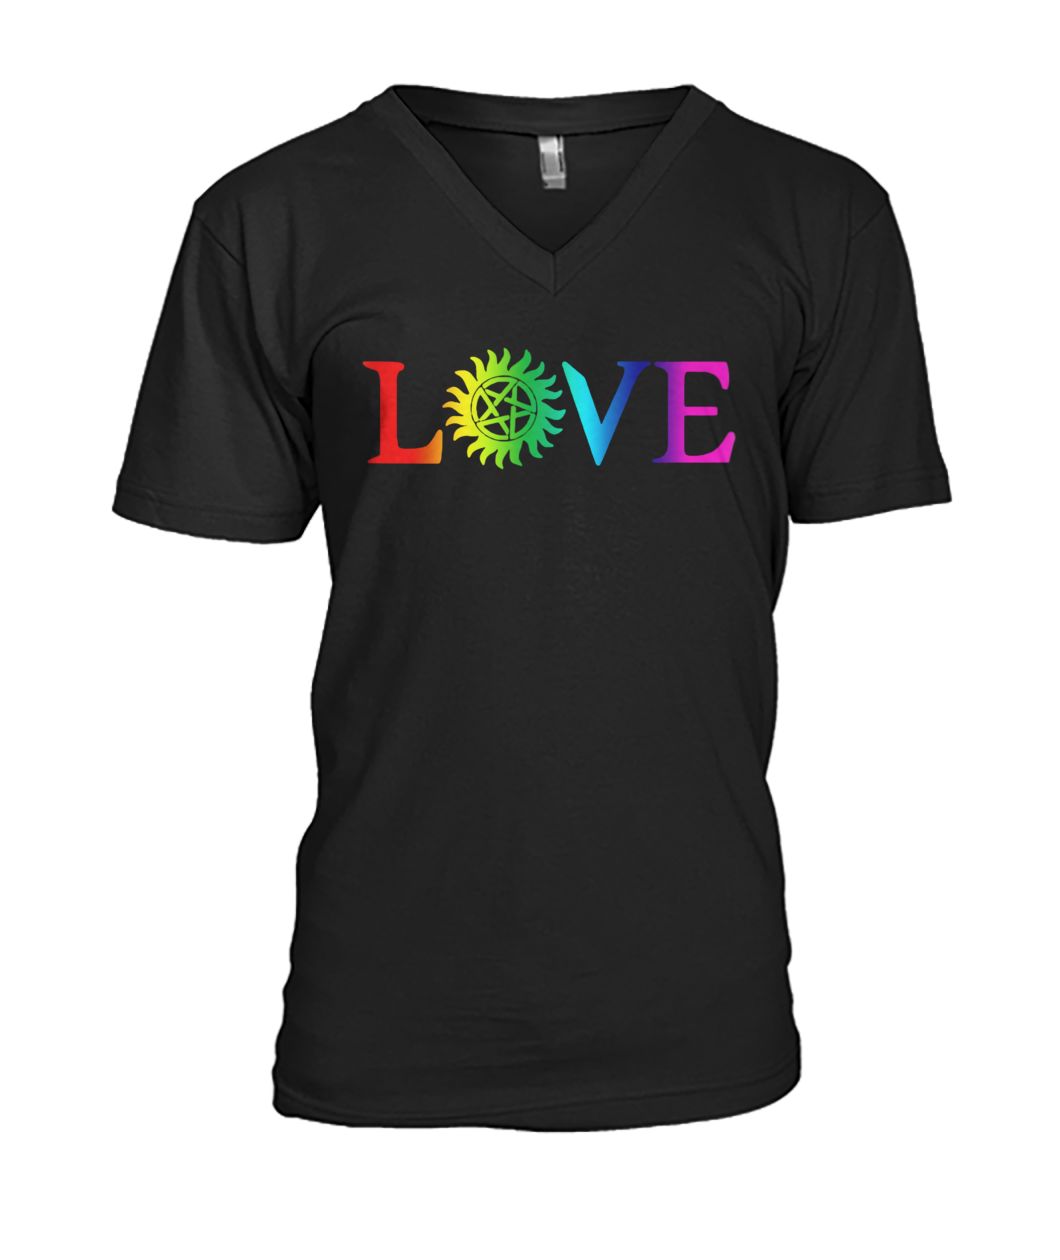 Love pride gay LGBT mens v-neck